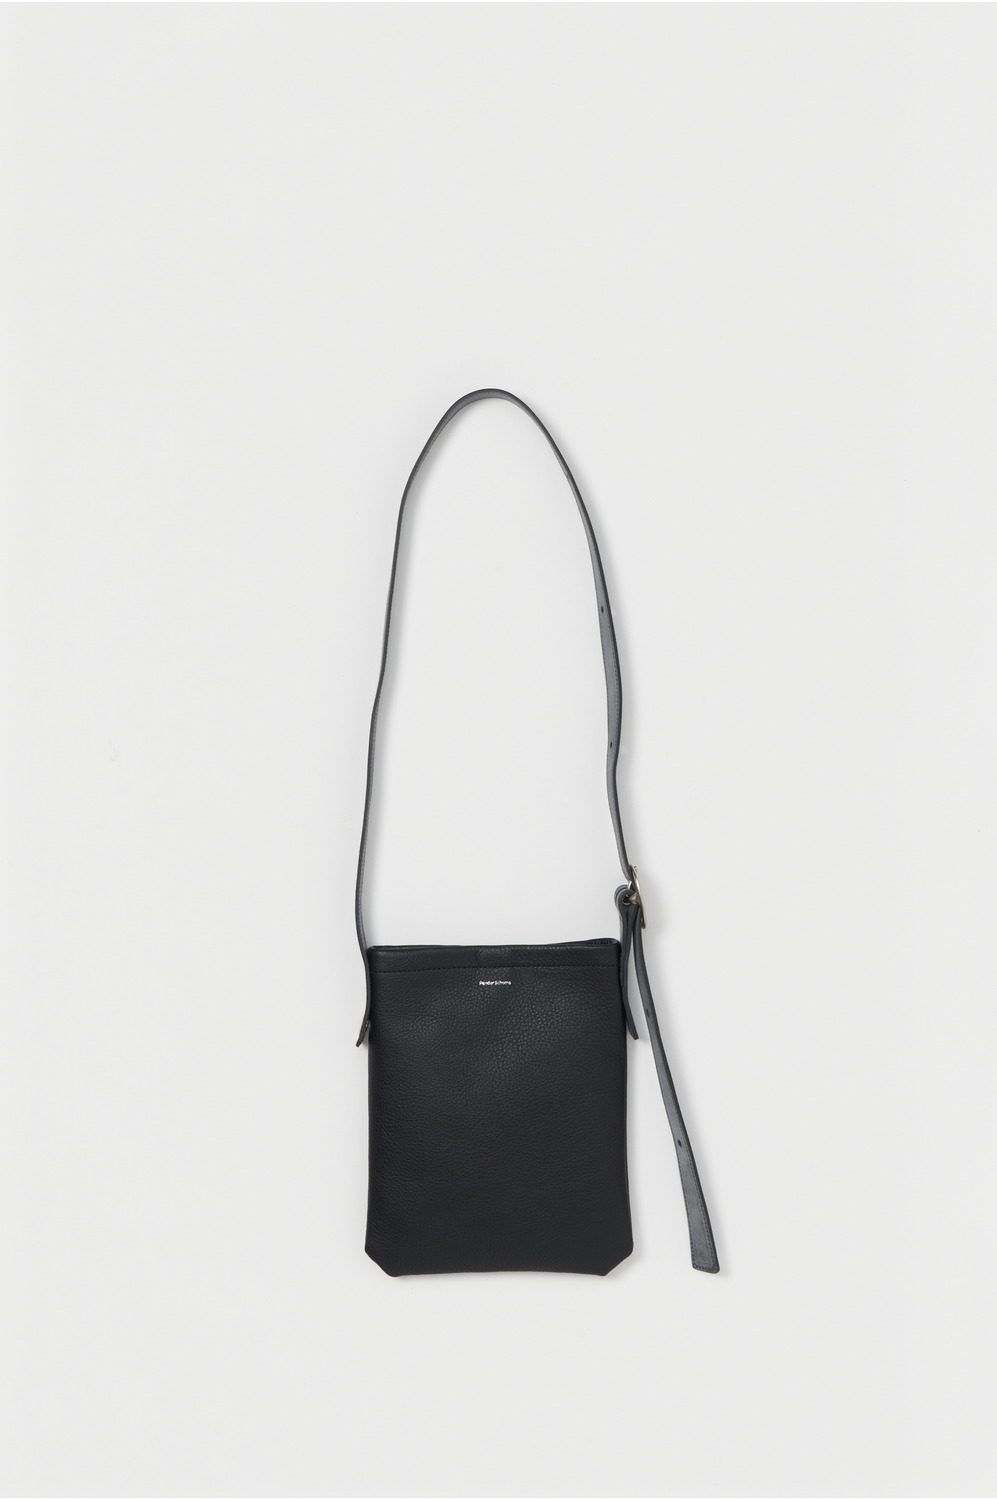 one side belt bag small 詳細画像 black 1